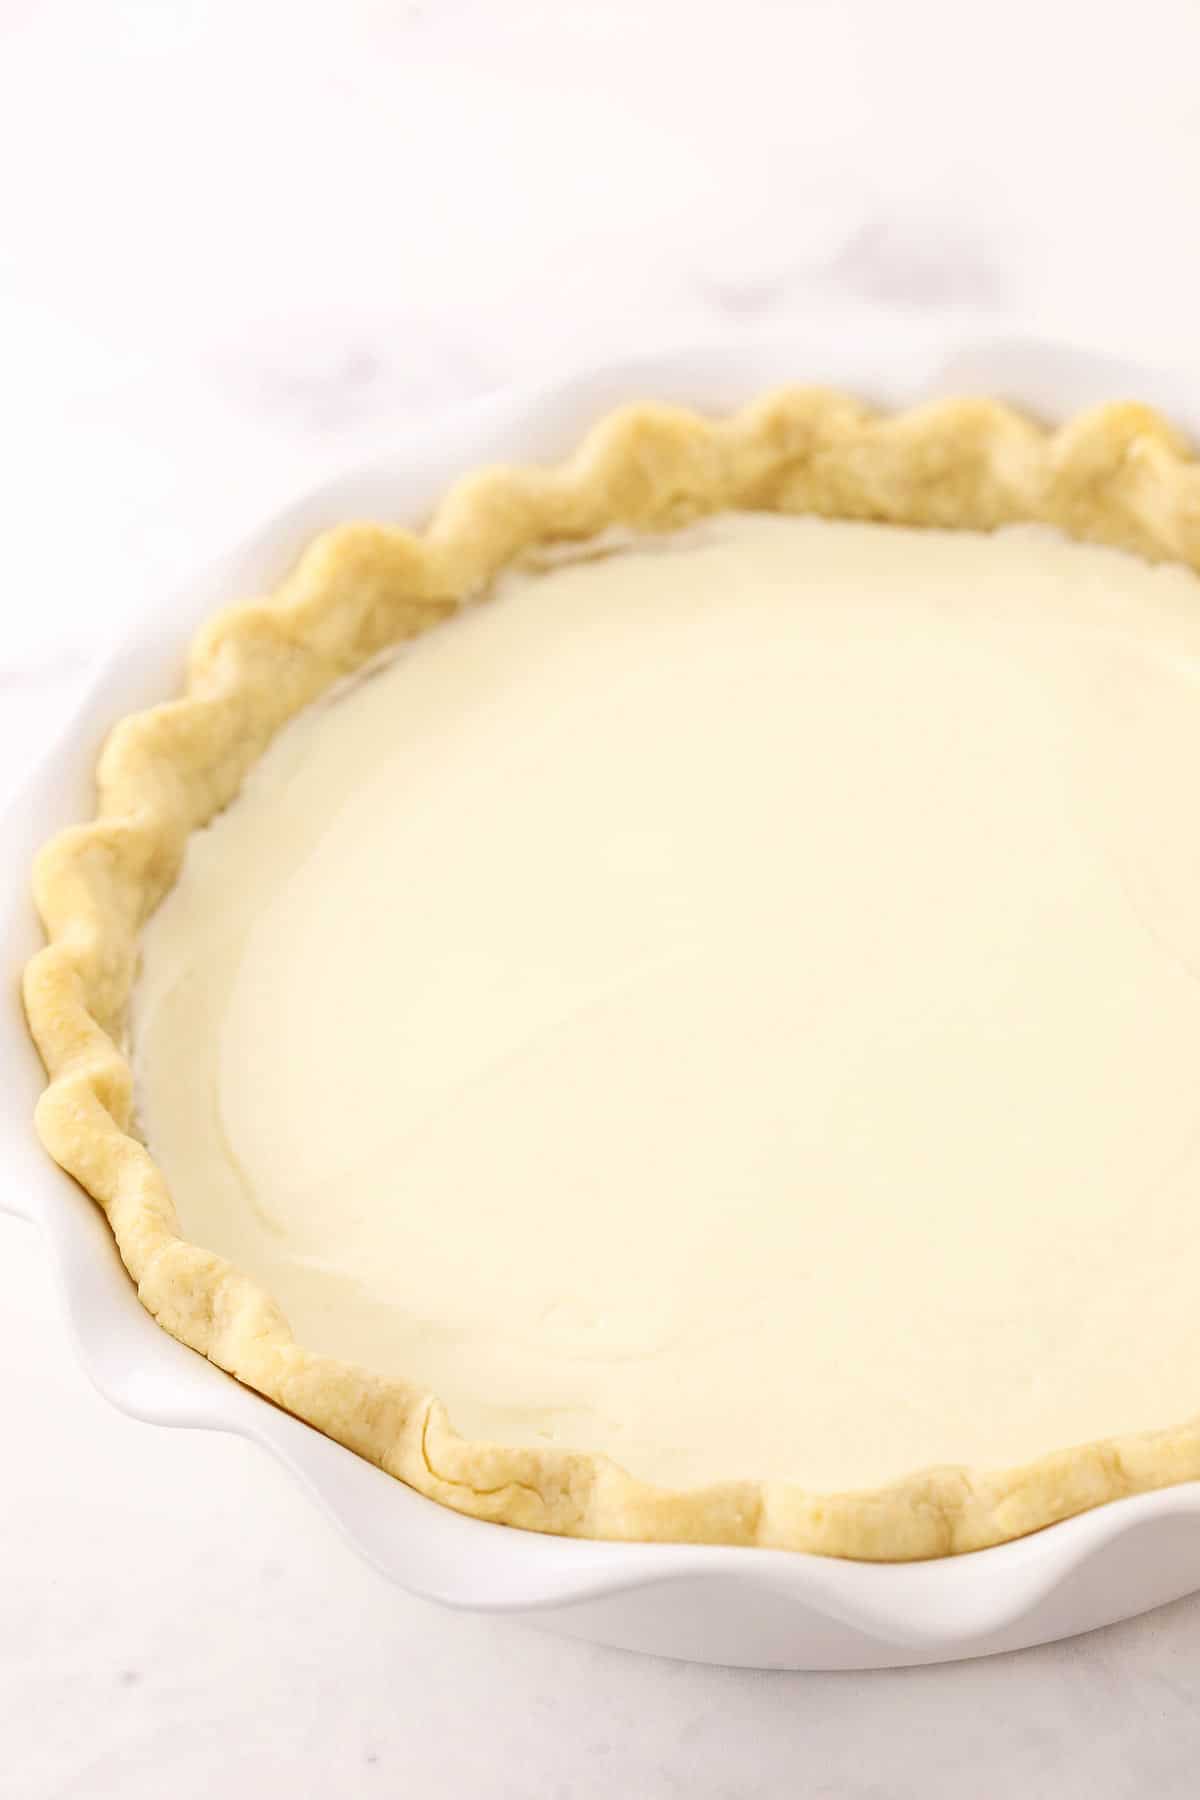 step 6 - cream filling spread evenly in pie crust